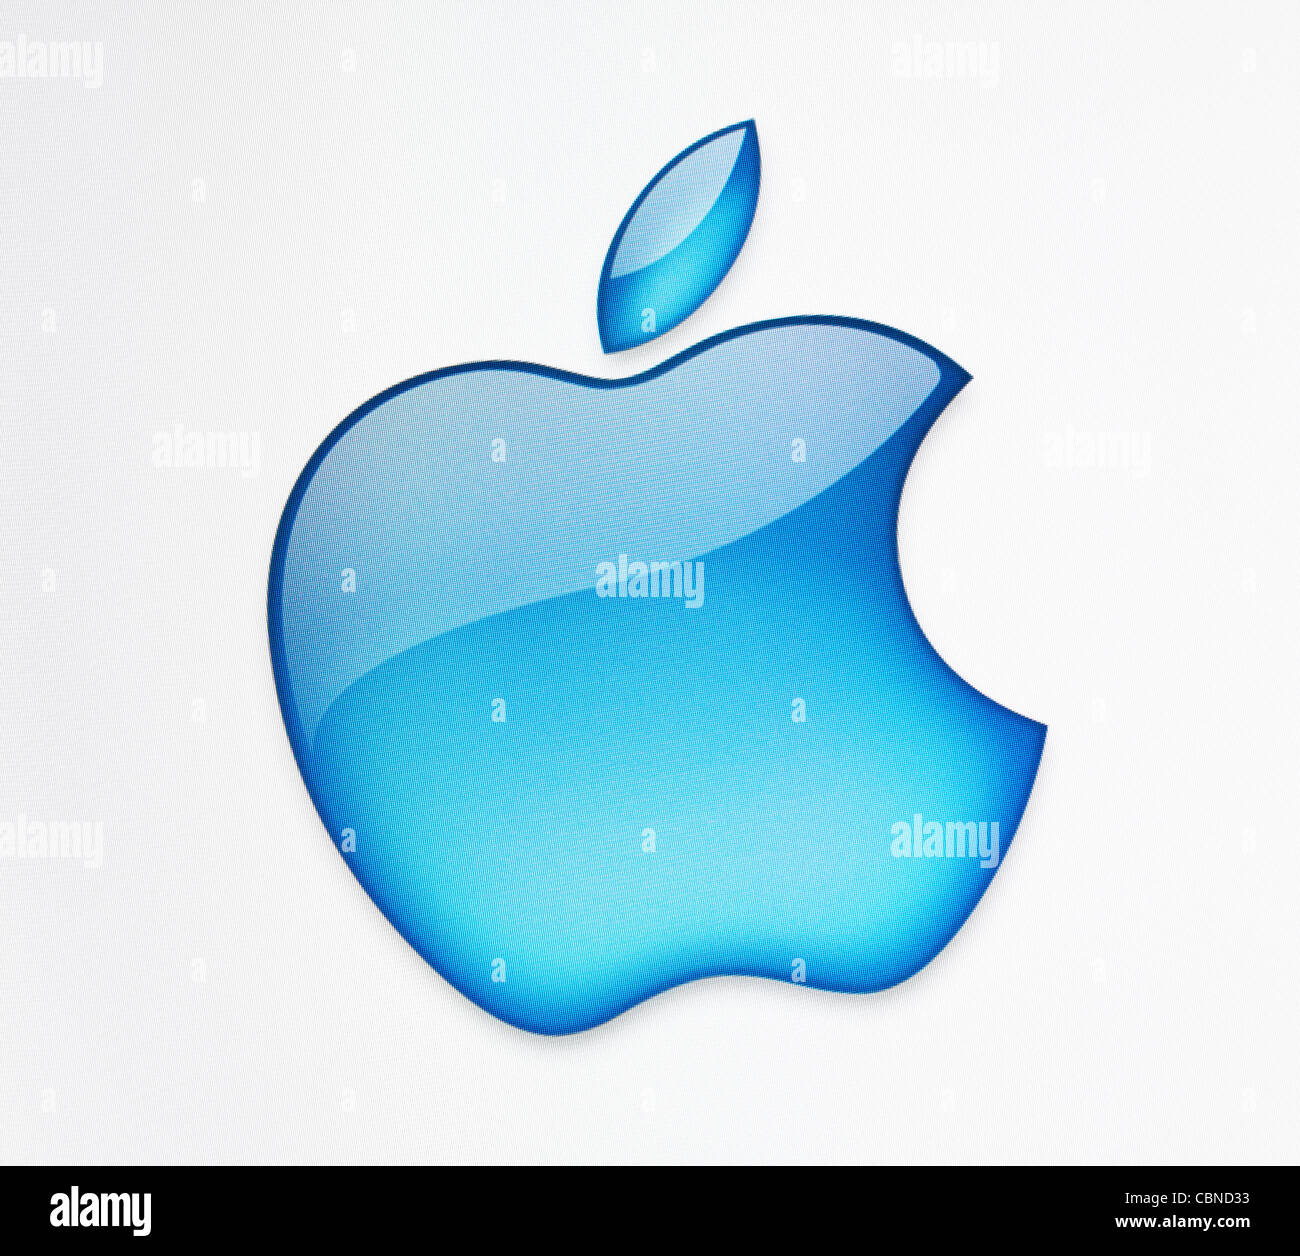 apple logo 2011